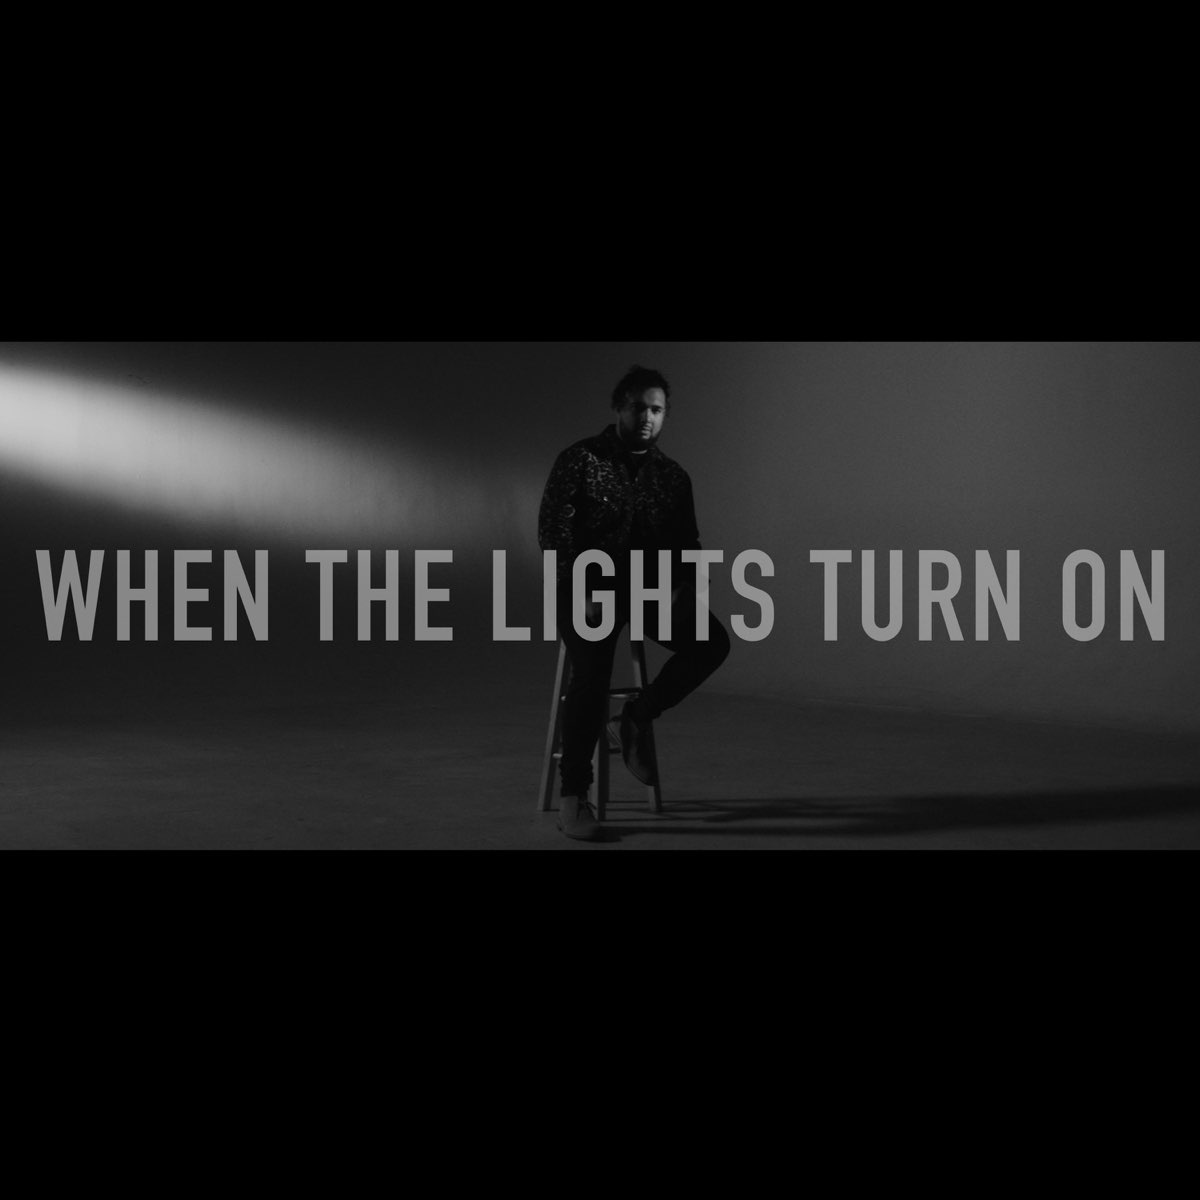 Turn all the Lights on. Turn of the Light песня певец. We turn on the light